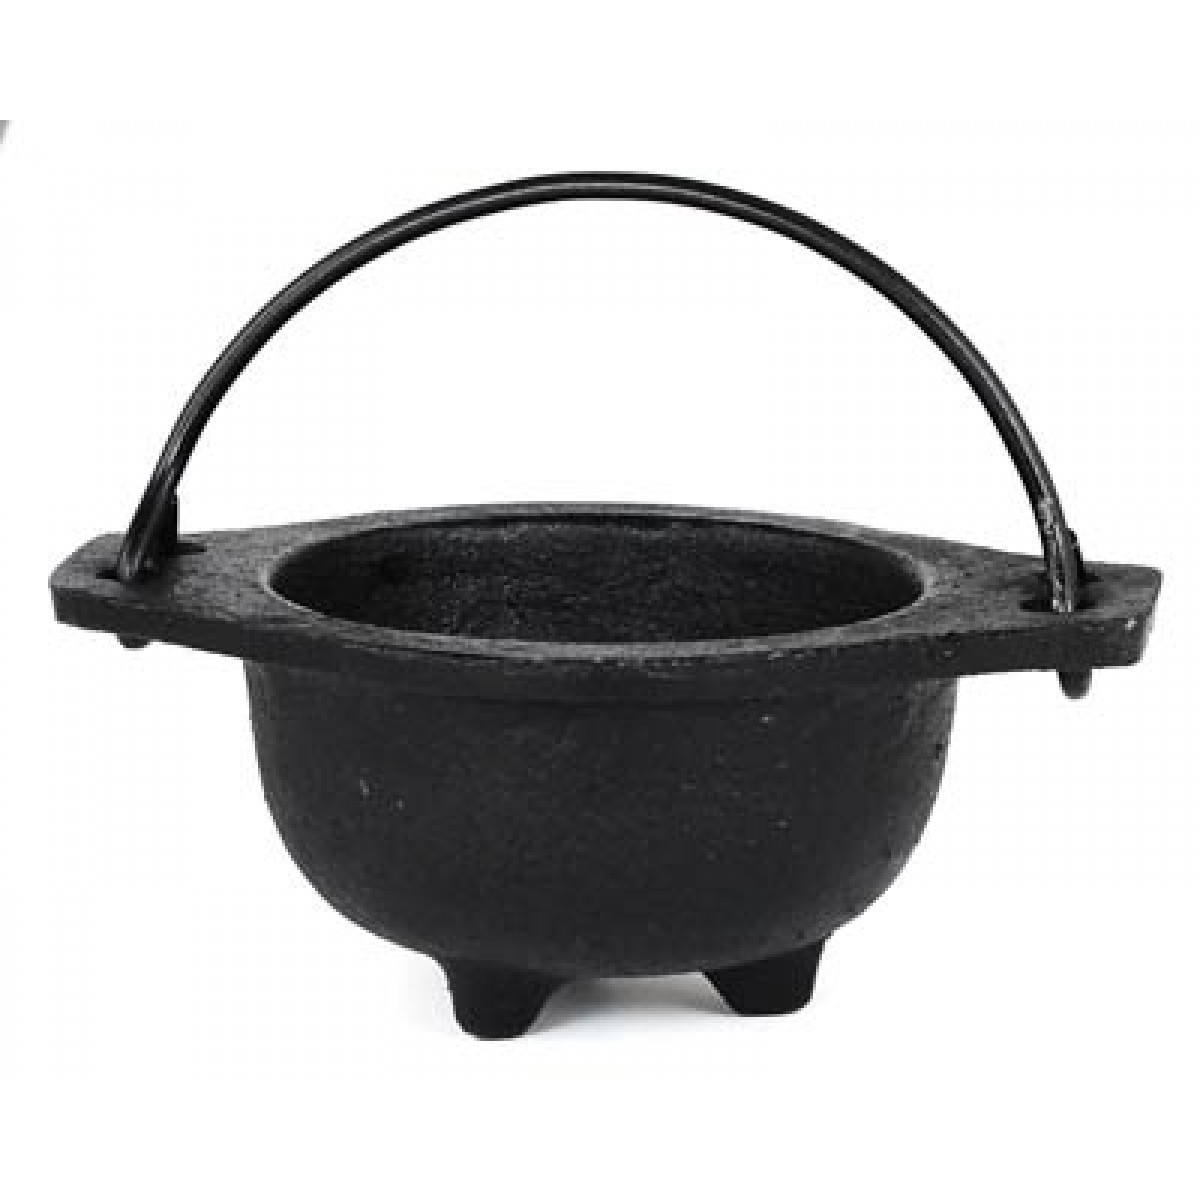 Small Cauldron - Cast Iron Cauldron Mini for Ritual, Incenses & Resins